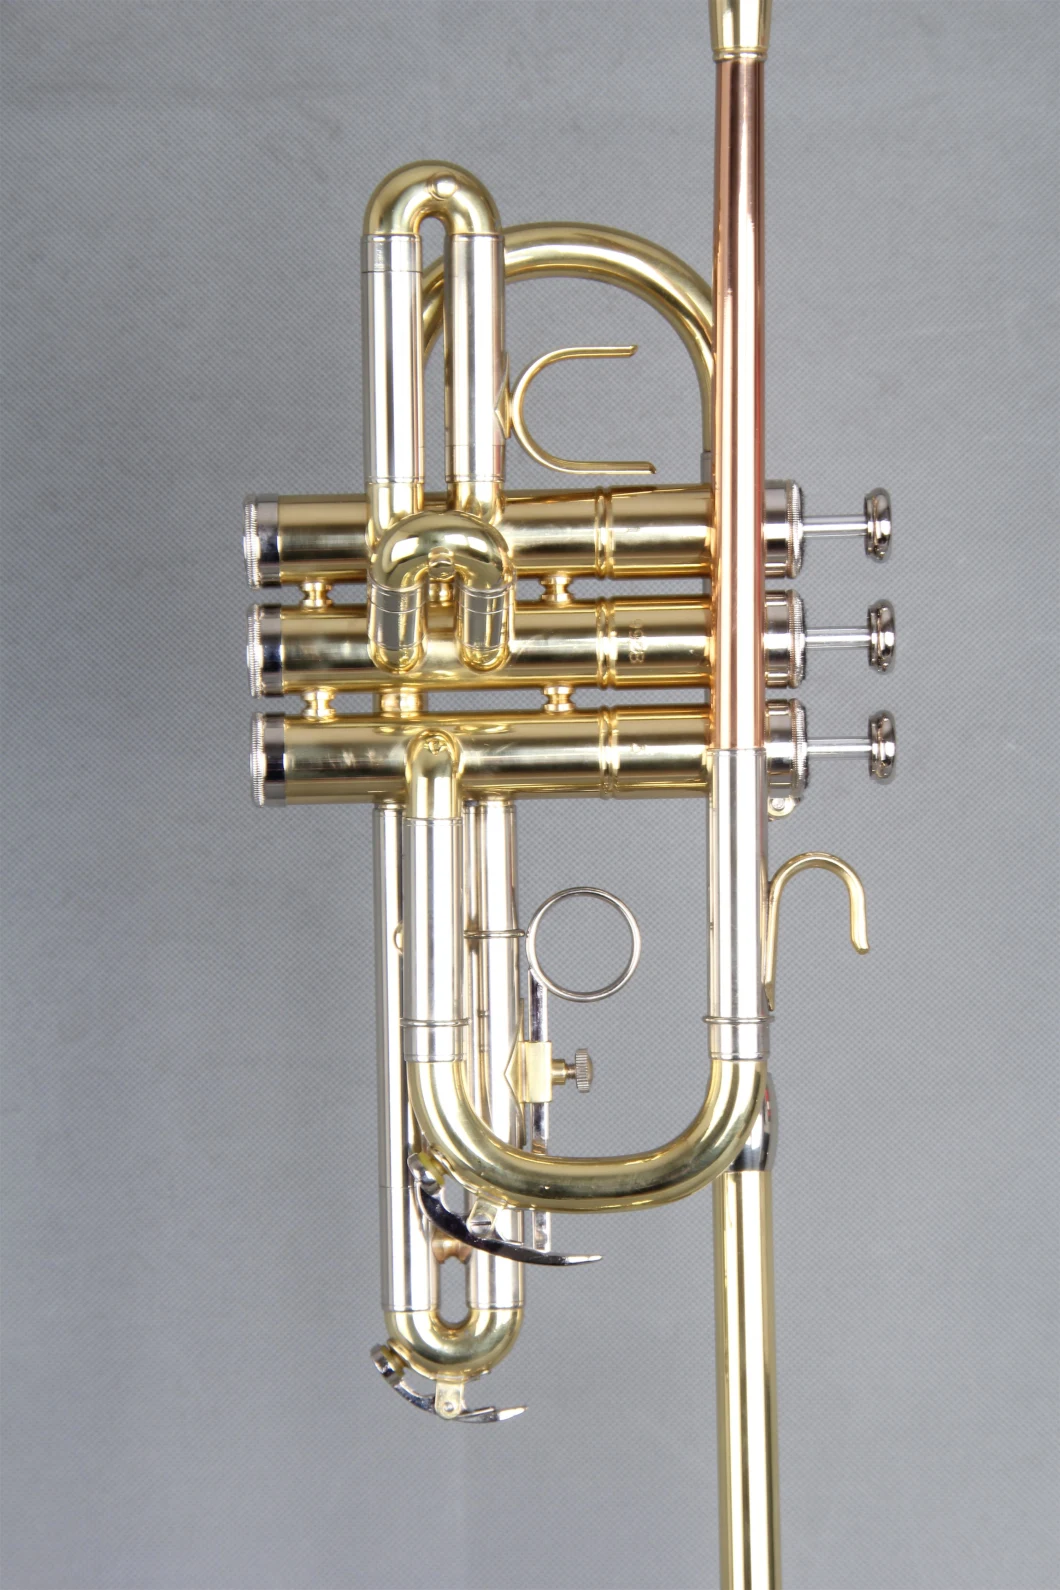 Herald Trumpet/ Bb Trumpet/ Professional Herald Trumpet